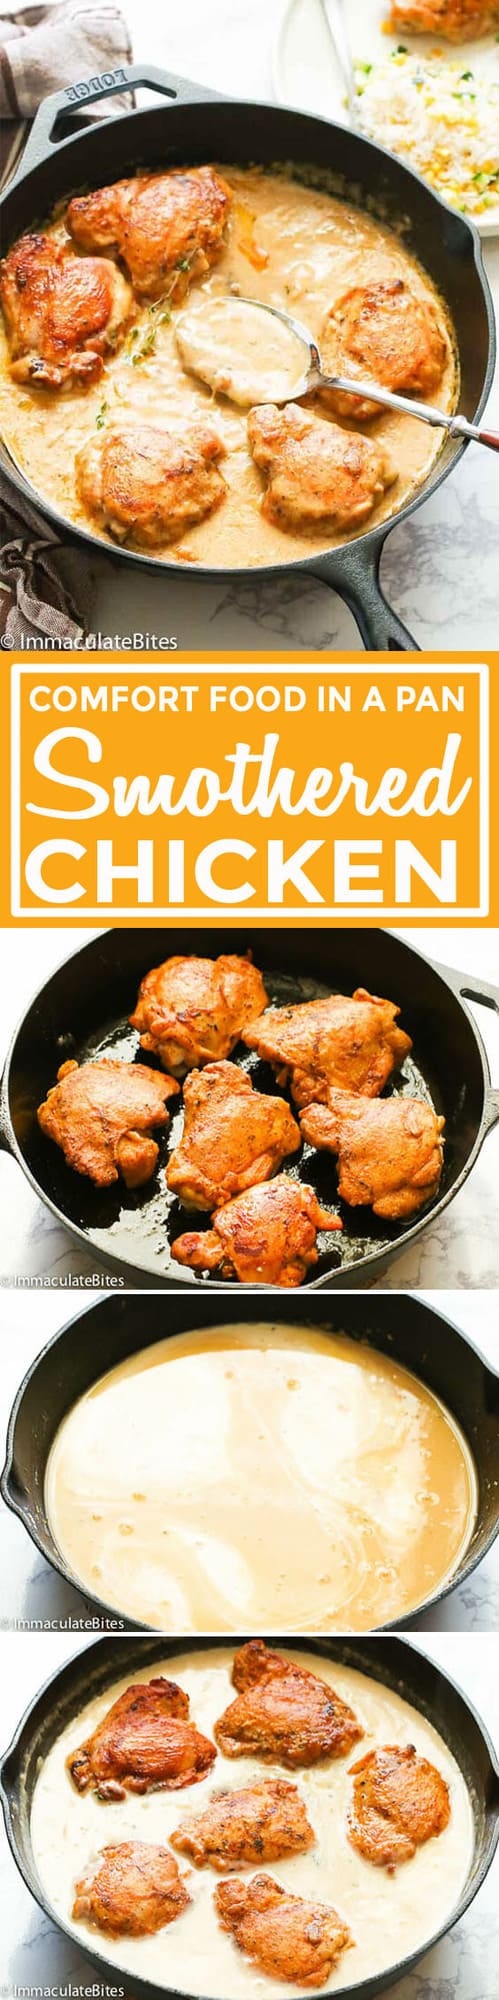 Smothered Chicken